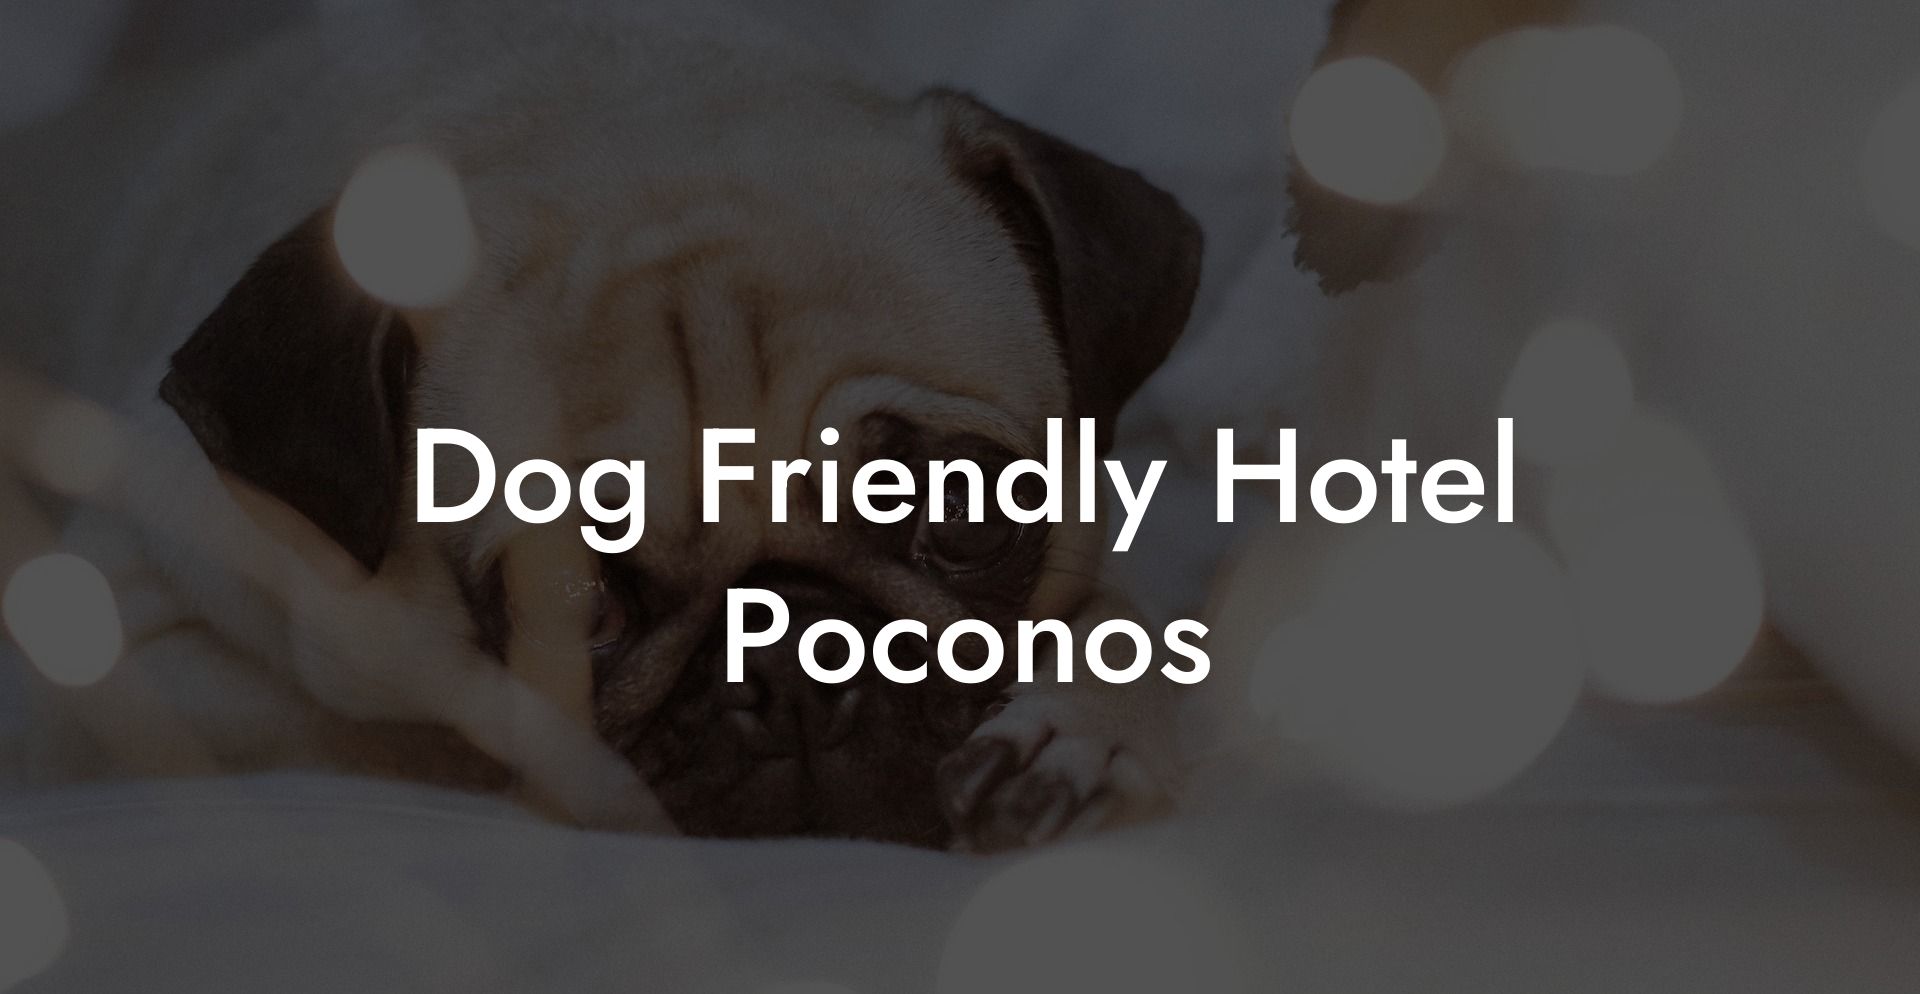 Dog Friendly Hotel Poconos